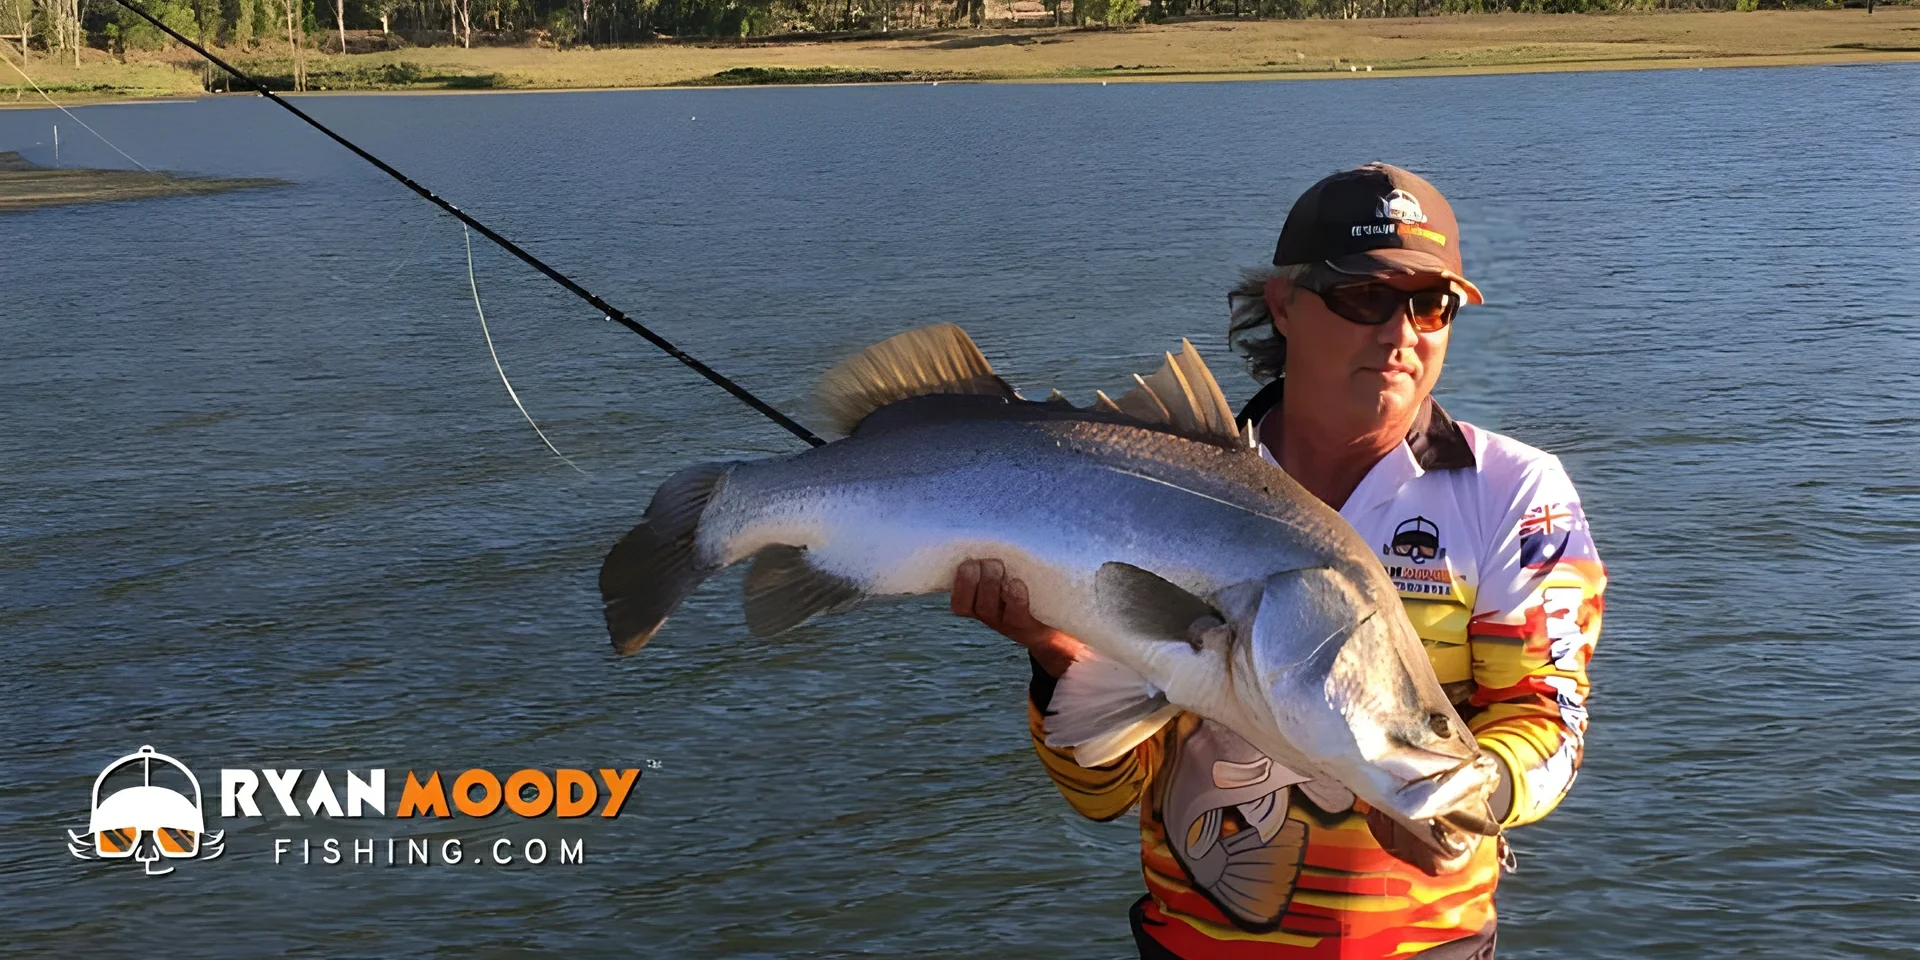 Big impoundment barra caught at the boat ramp - Ryan Moody Fishing